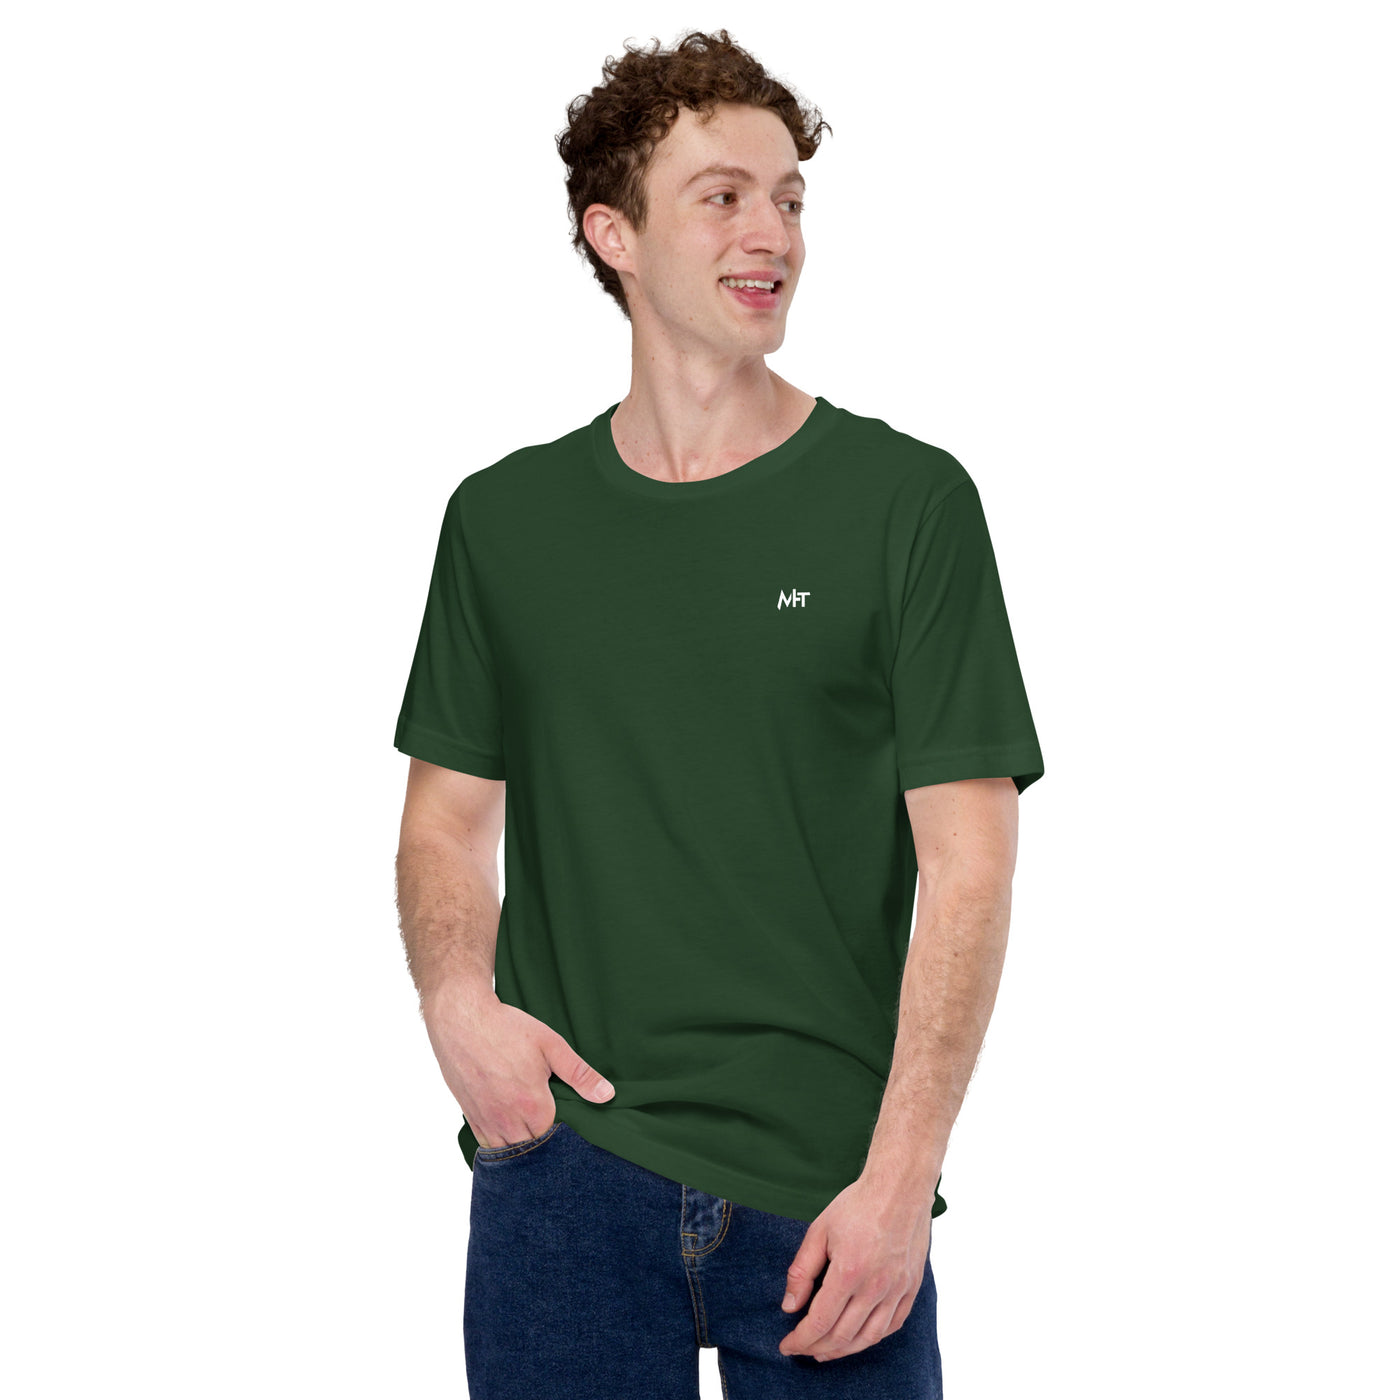 Gaming Dad - Unisex t-shirt ( Back Print )